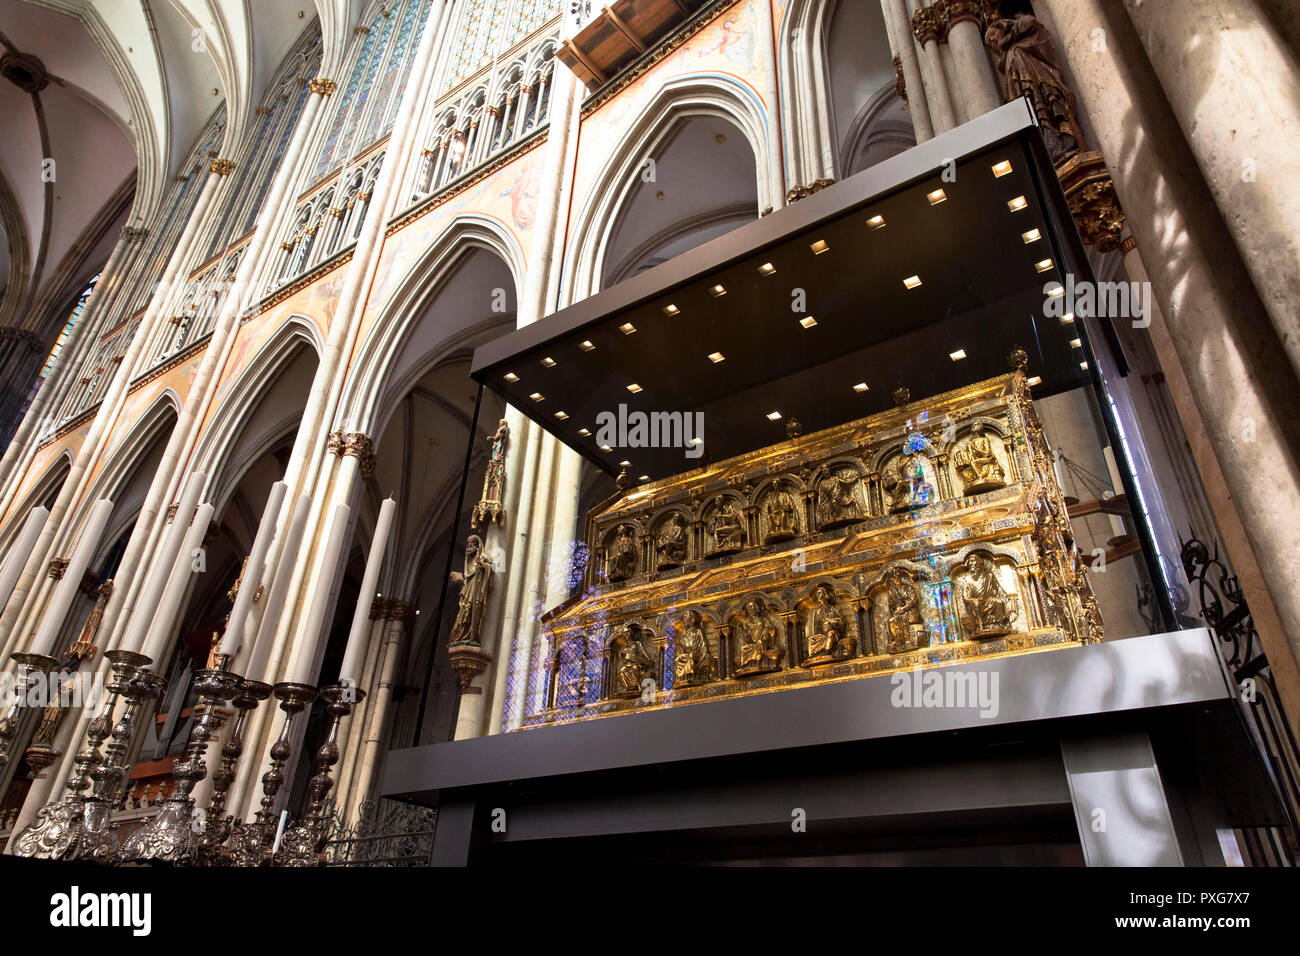 the shrine of the Three Magi at the cathedral, Cologne, Germany.  der Dreikoenigsschrein im Dom, Koeln, Deutschland. Stock Photo